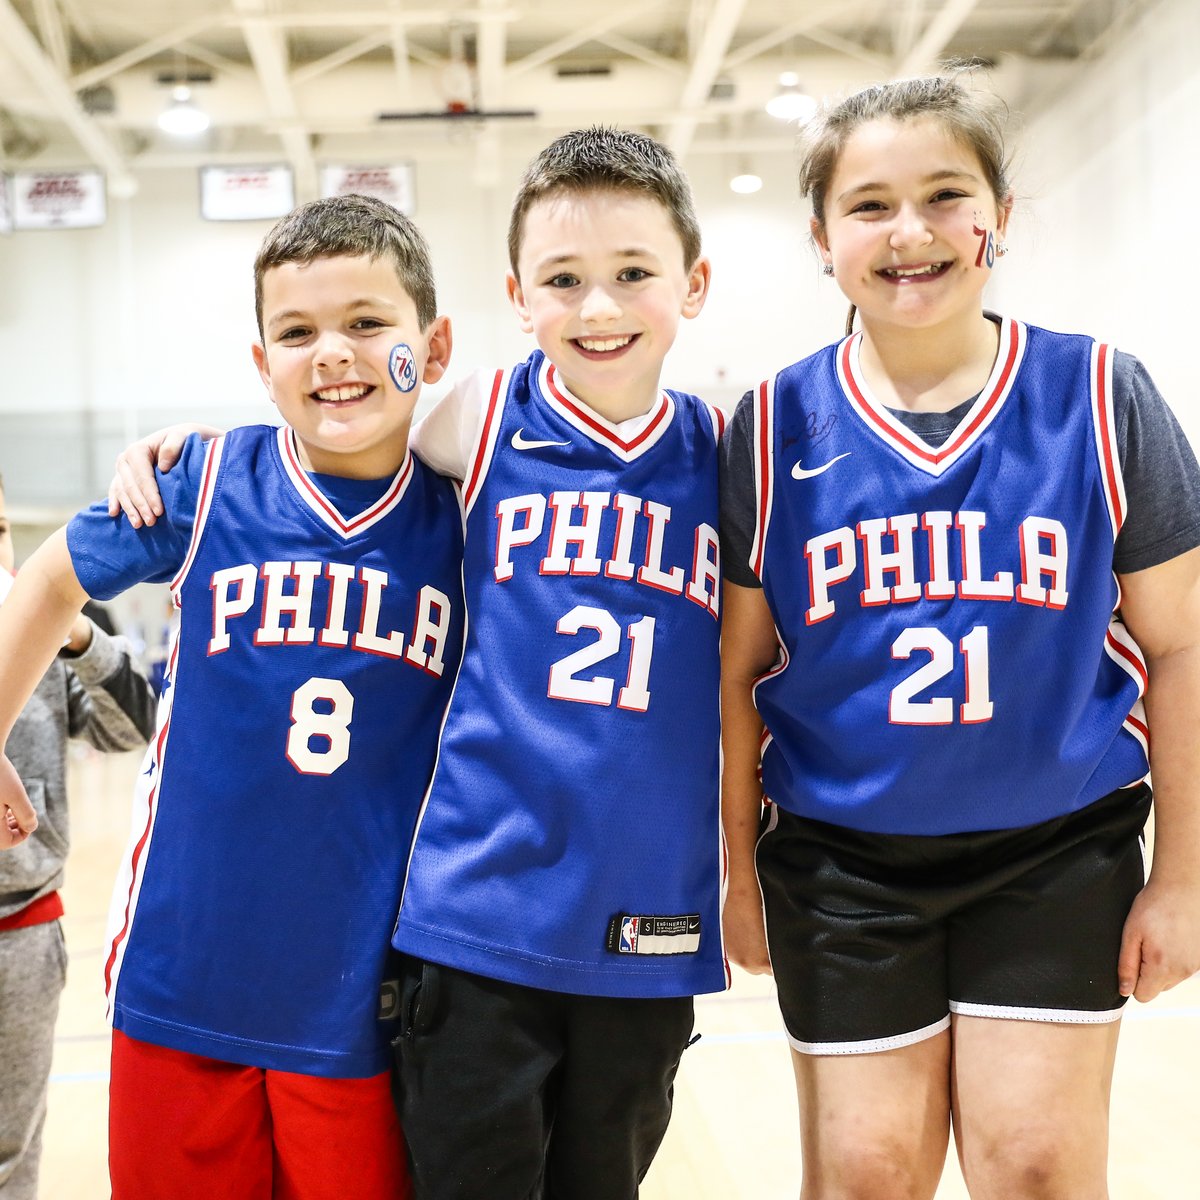 Philadelphia 76ers become first NBA team to have sponsor on jerseys, NBA